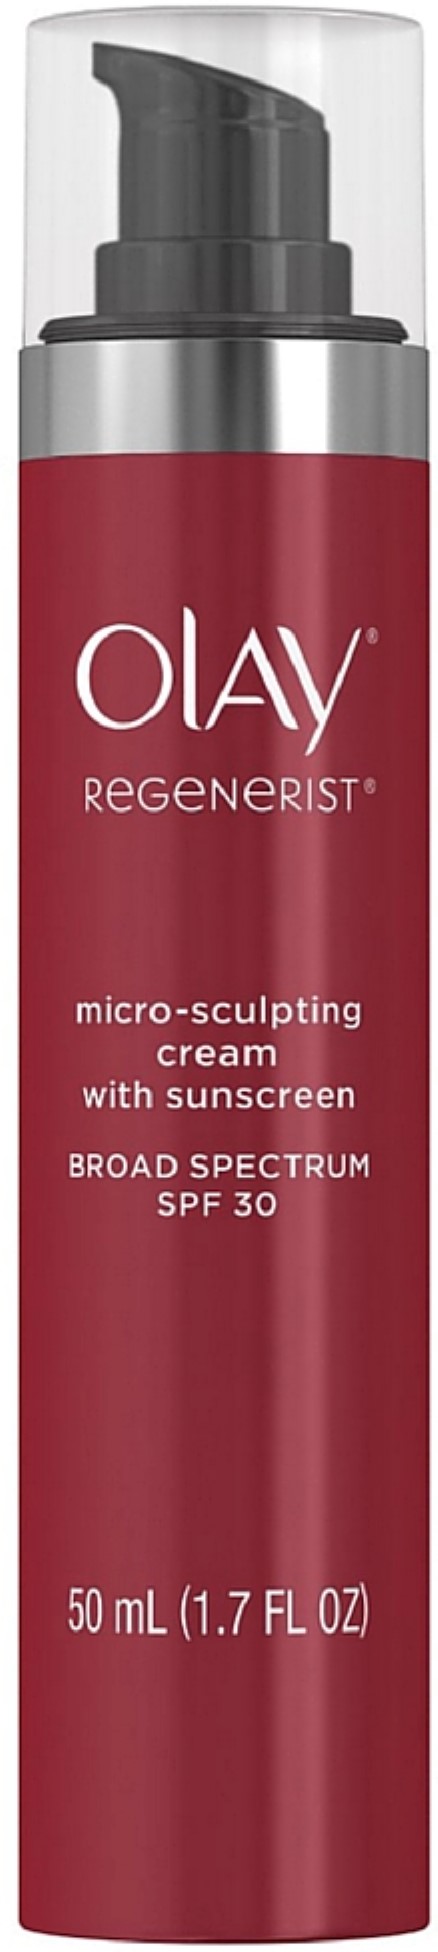 OLAY Regenerist Micro-Sculpting Cream with Sunscreen Broad Spectrum SPF 30 1.70 oz - image 1 of 5